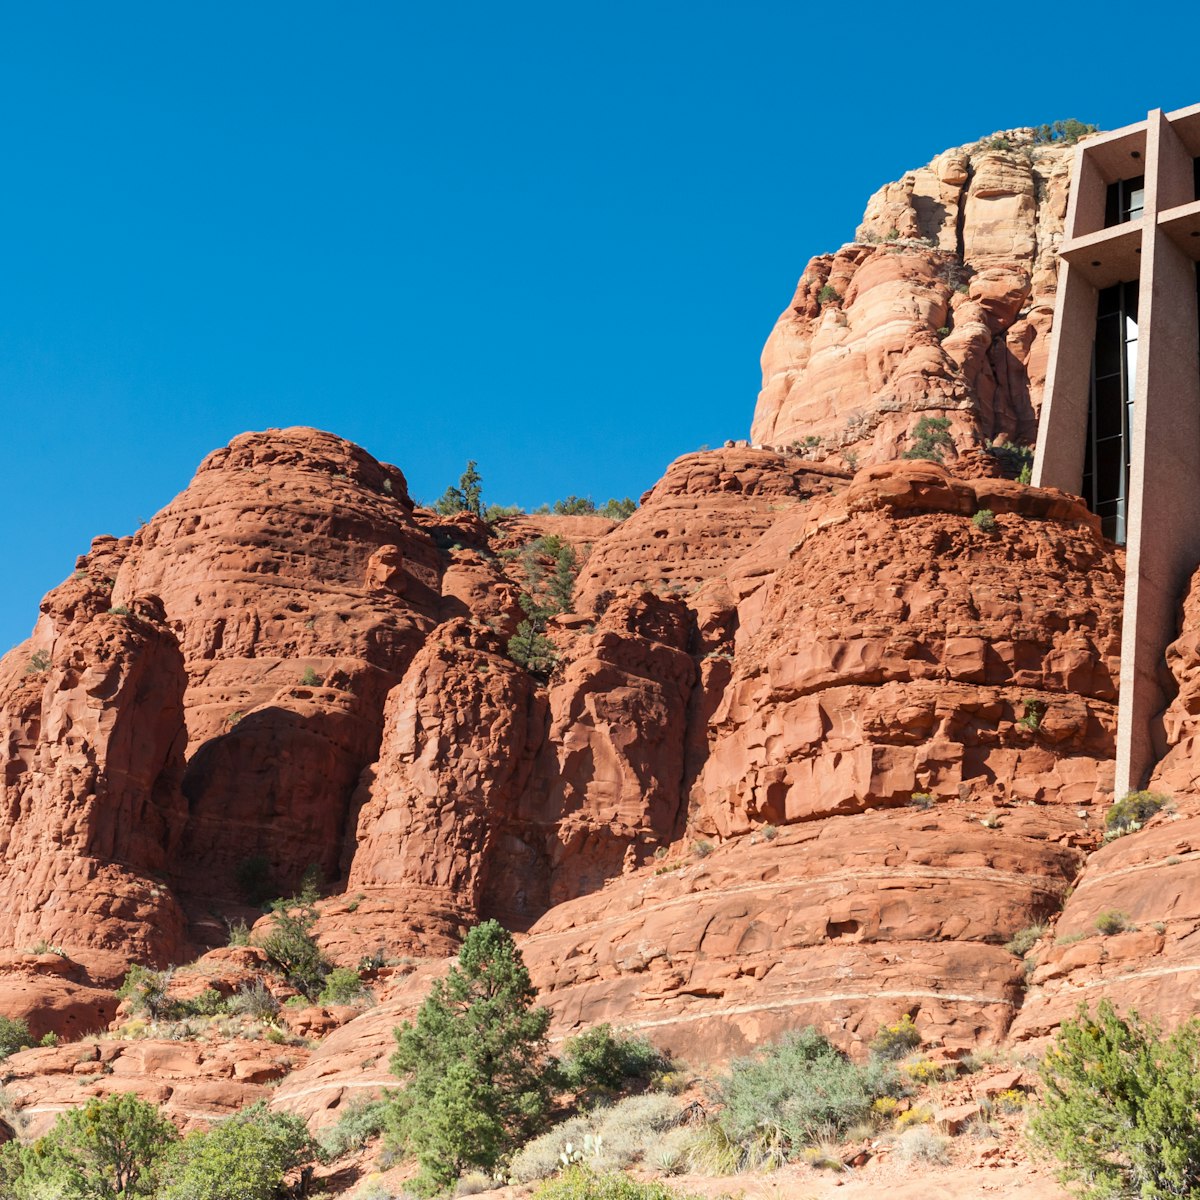 USA, Arizona, Yavapai county. Sedona, View of Chapel of Holy Cross